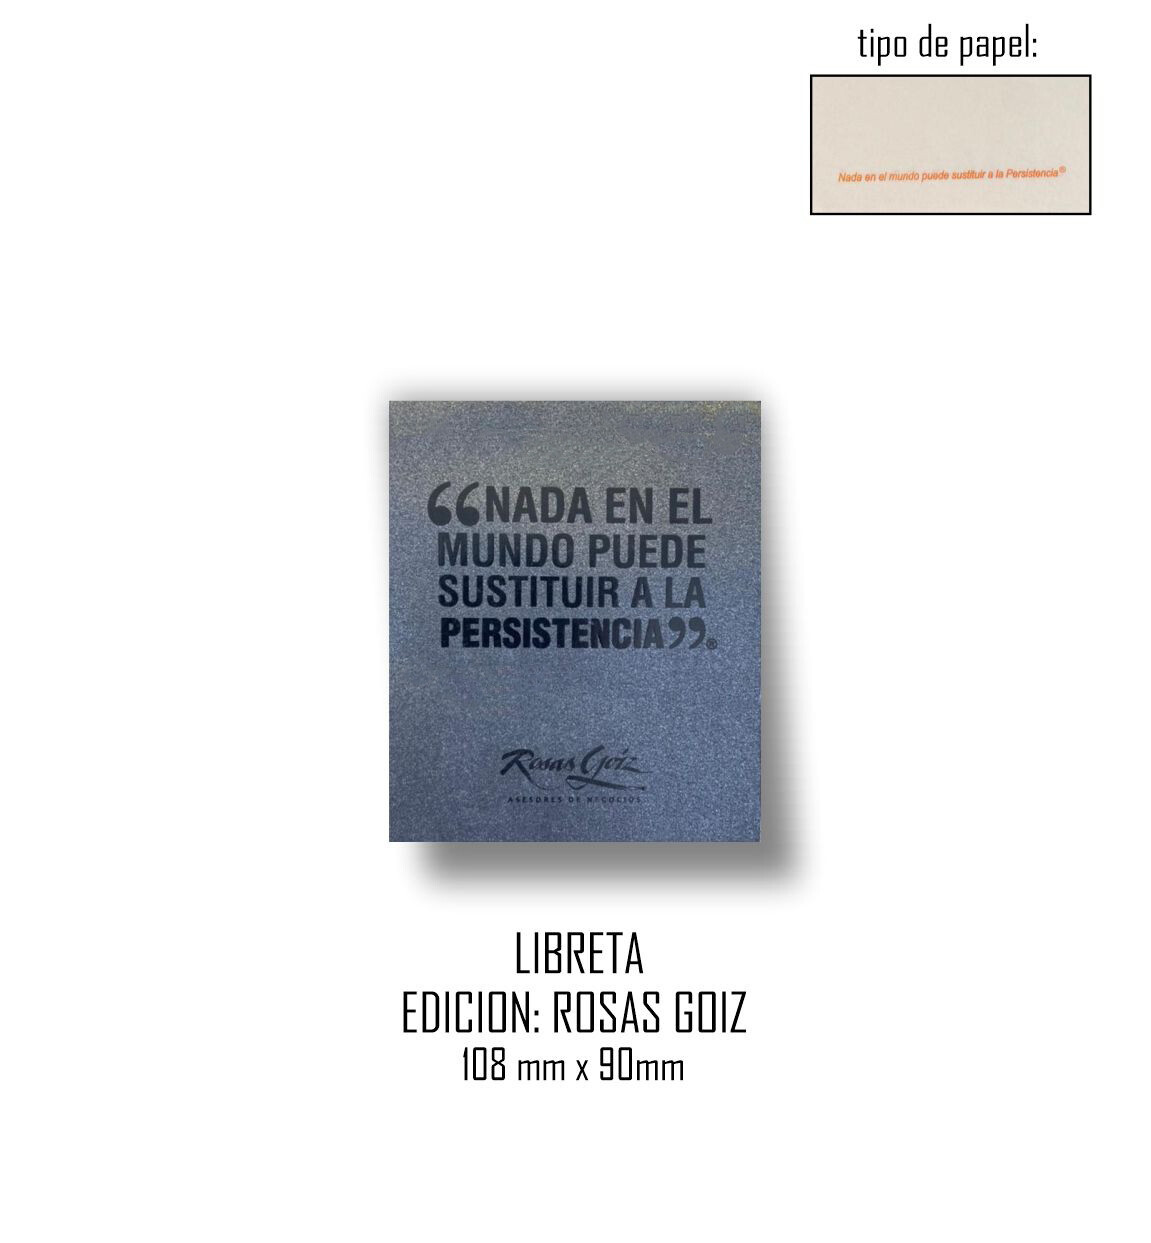 Libreta Edición: Rosas Goiz 108mm x 90mm